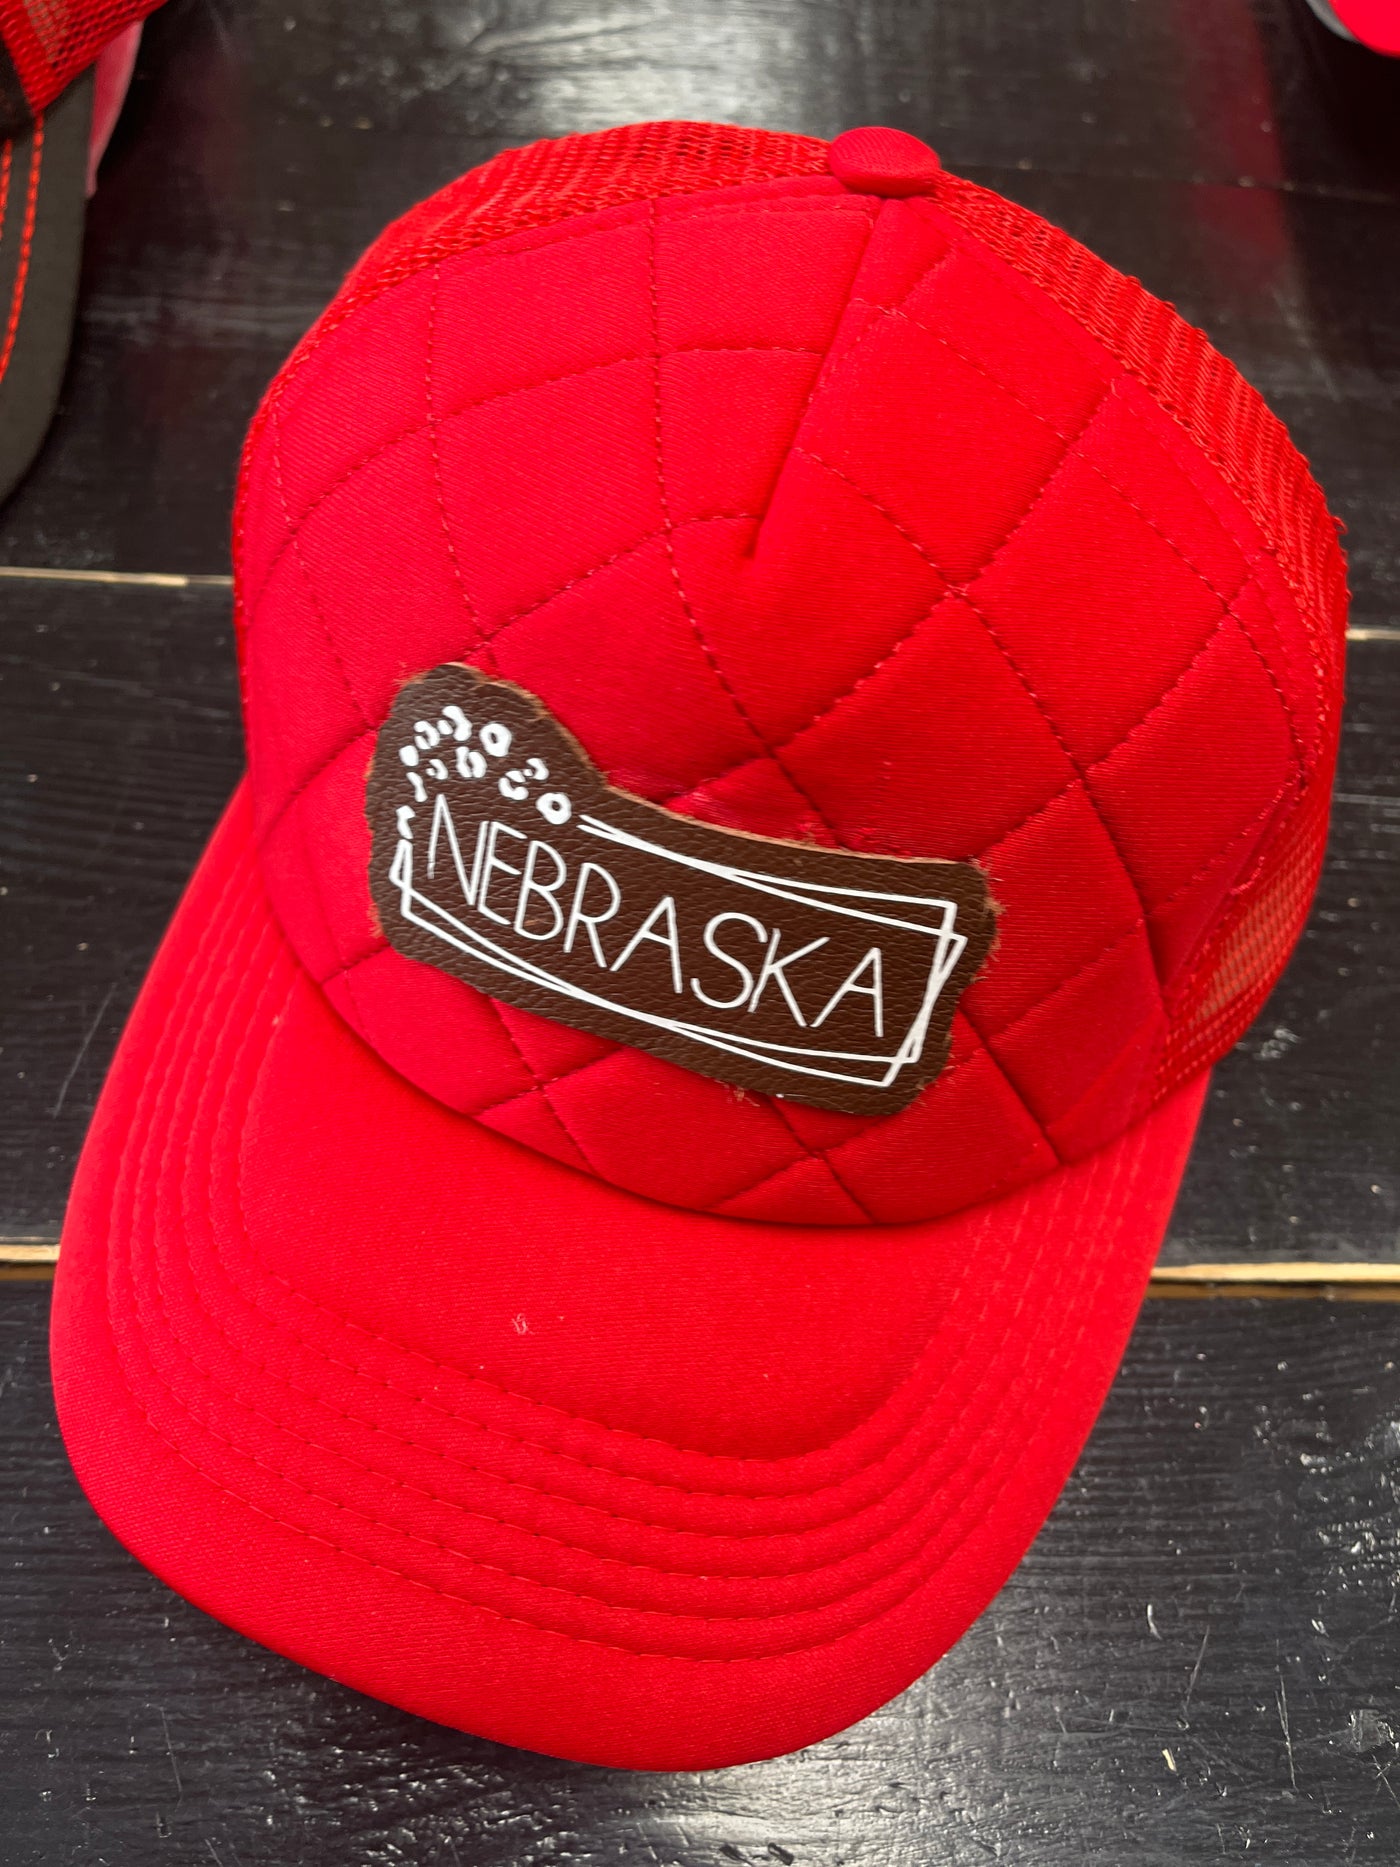 Nebraska Ball Cap - Quilted Trucker Style